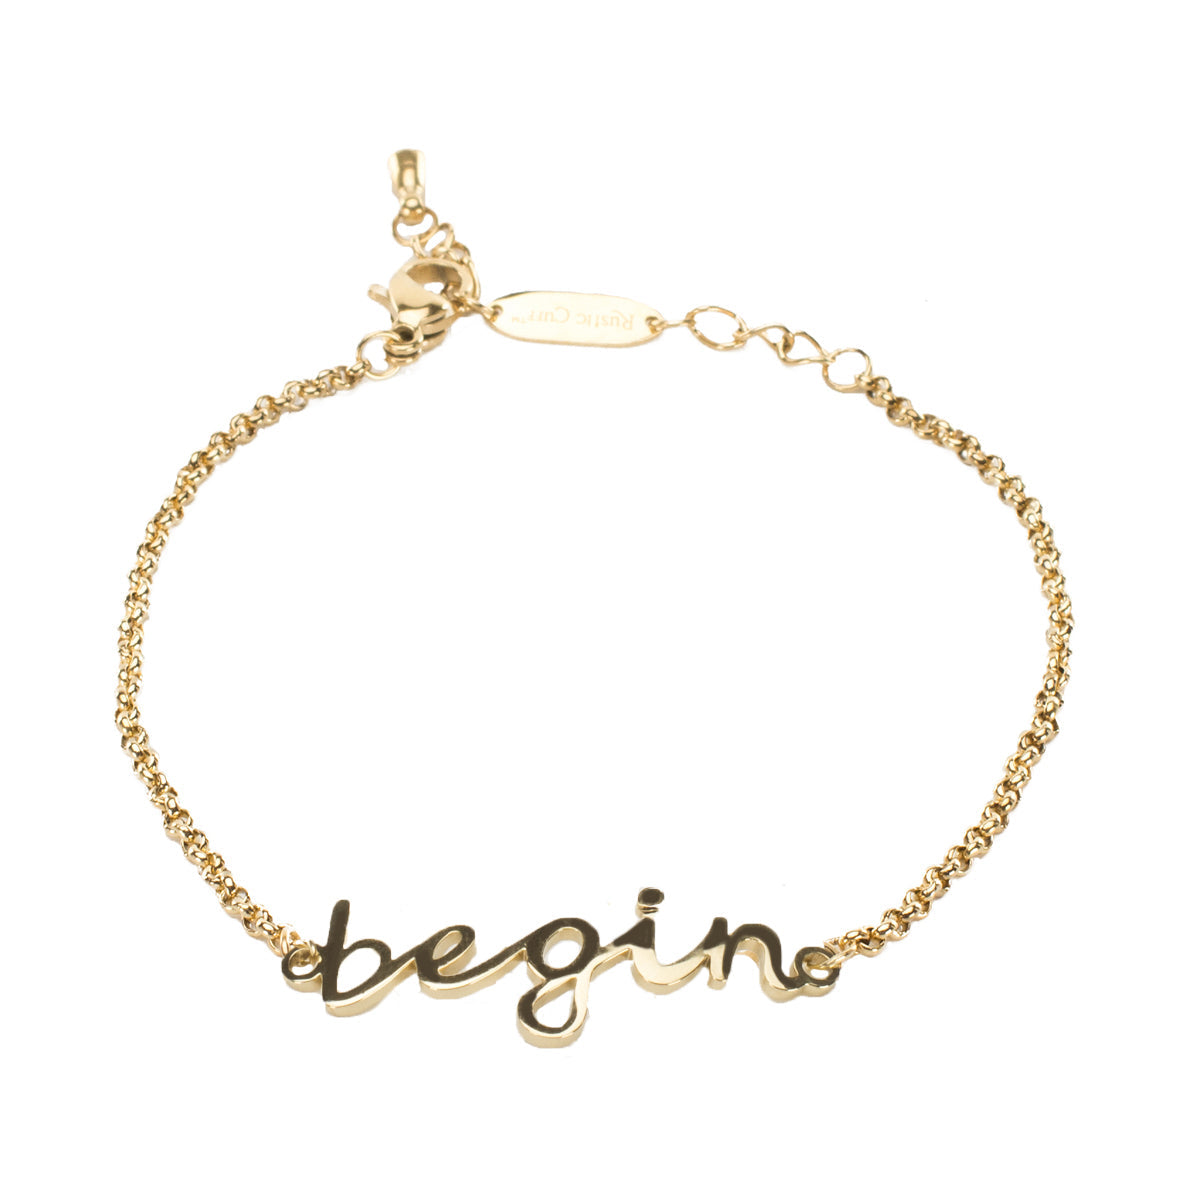 +Maria Inspirational "begin" - Gold